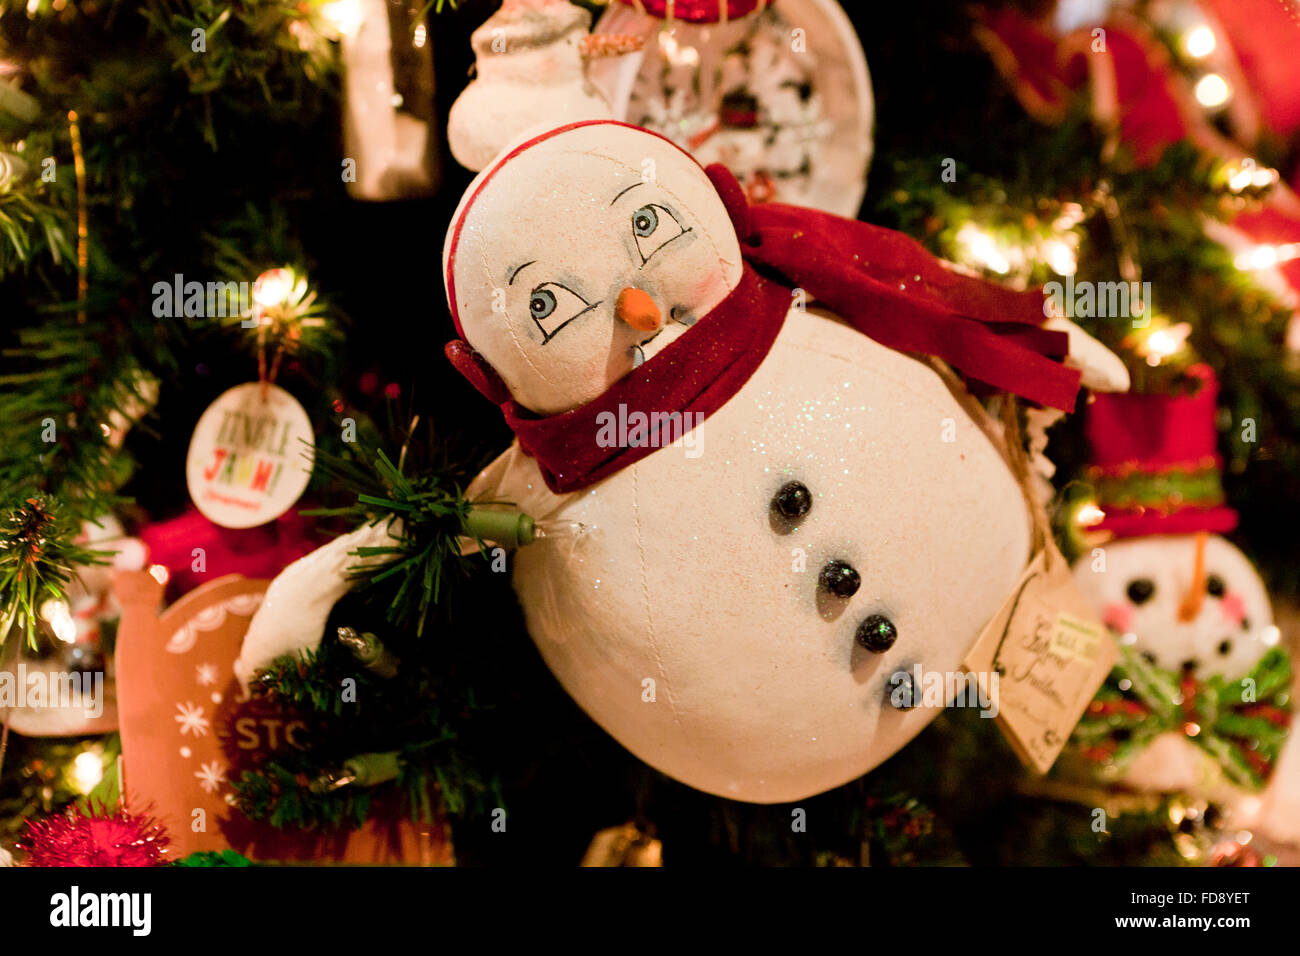 Snowman Christmas ornament on tree Stock Photo